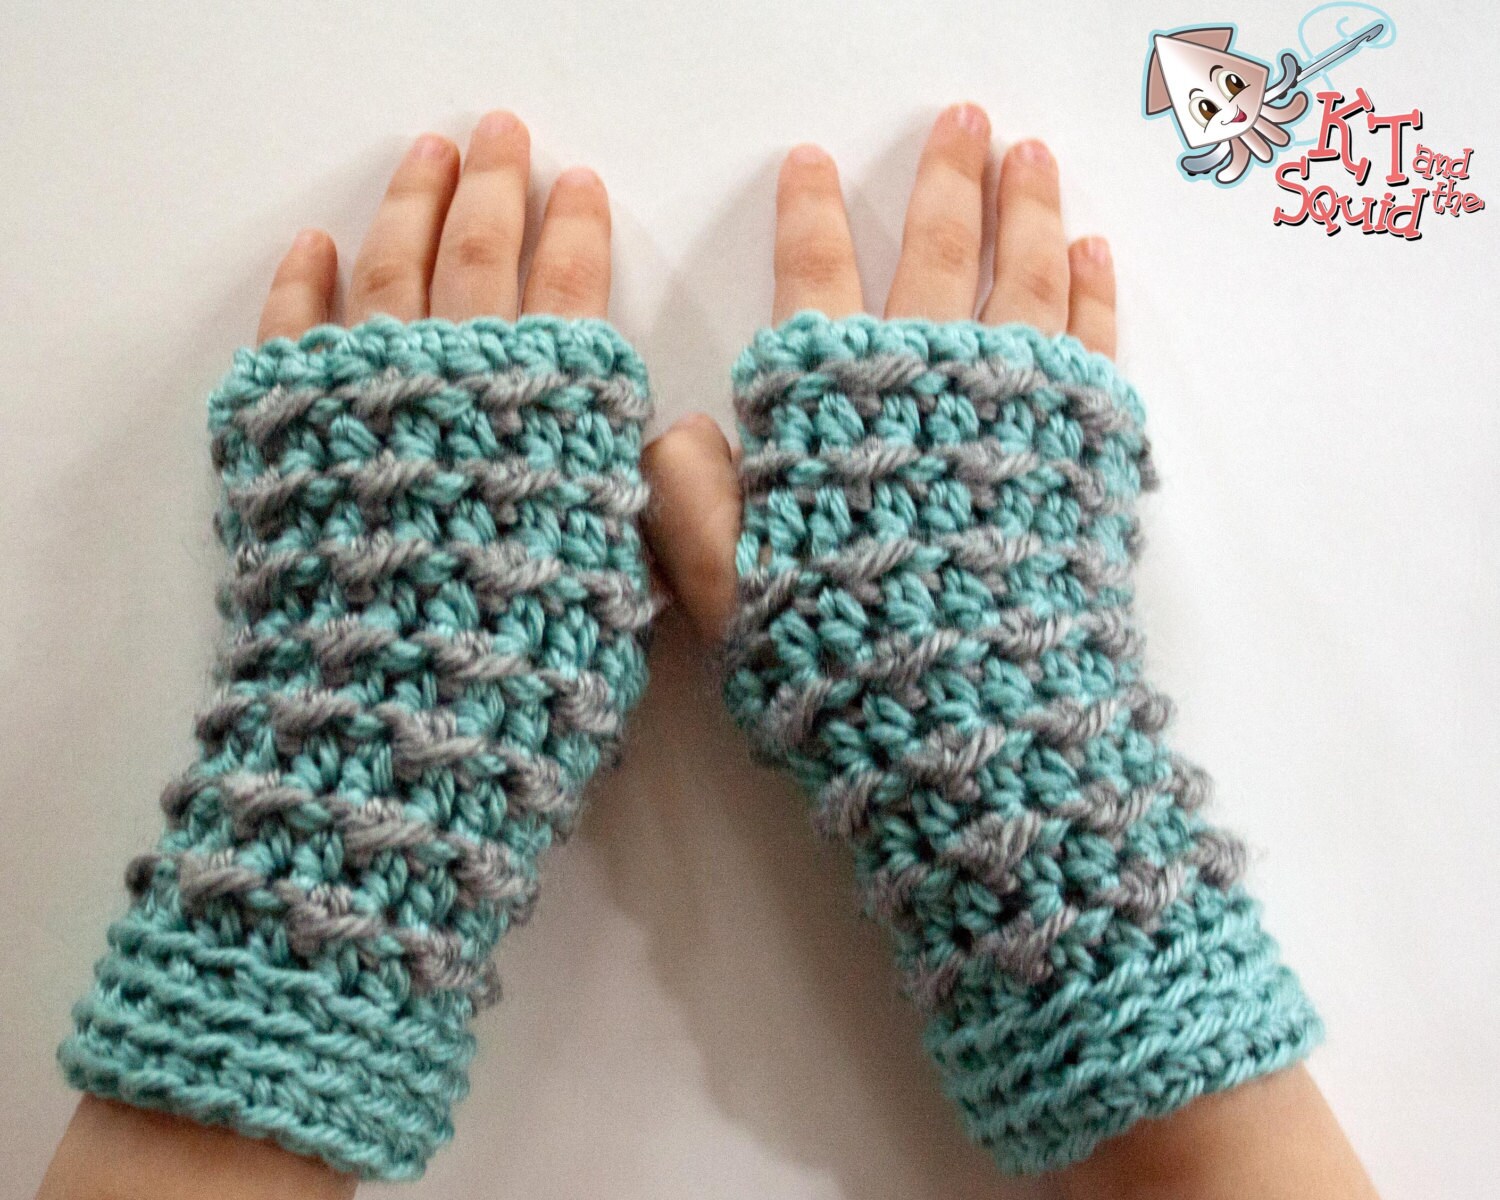 Ravelry: Chain Mail Gloves pattern by Teresa Seasons